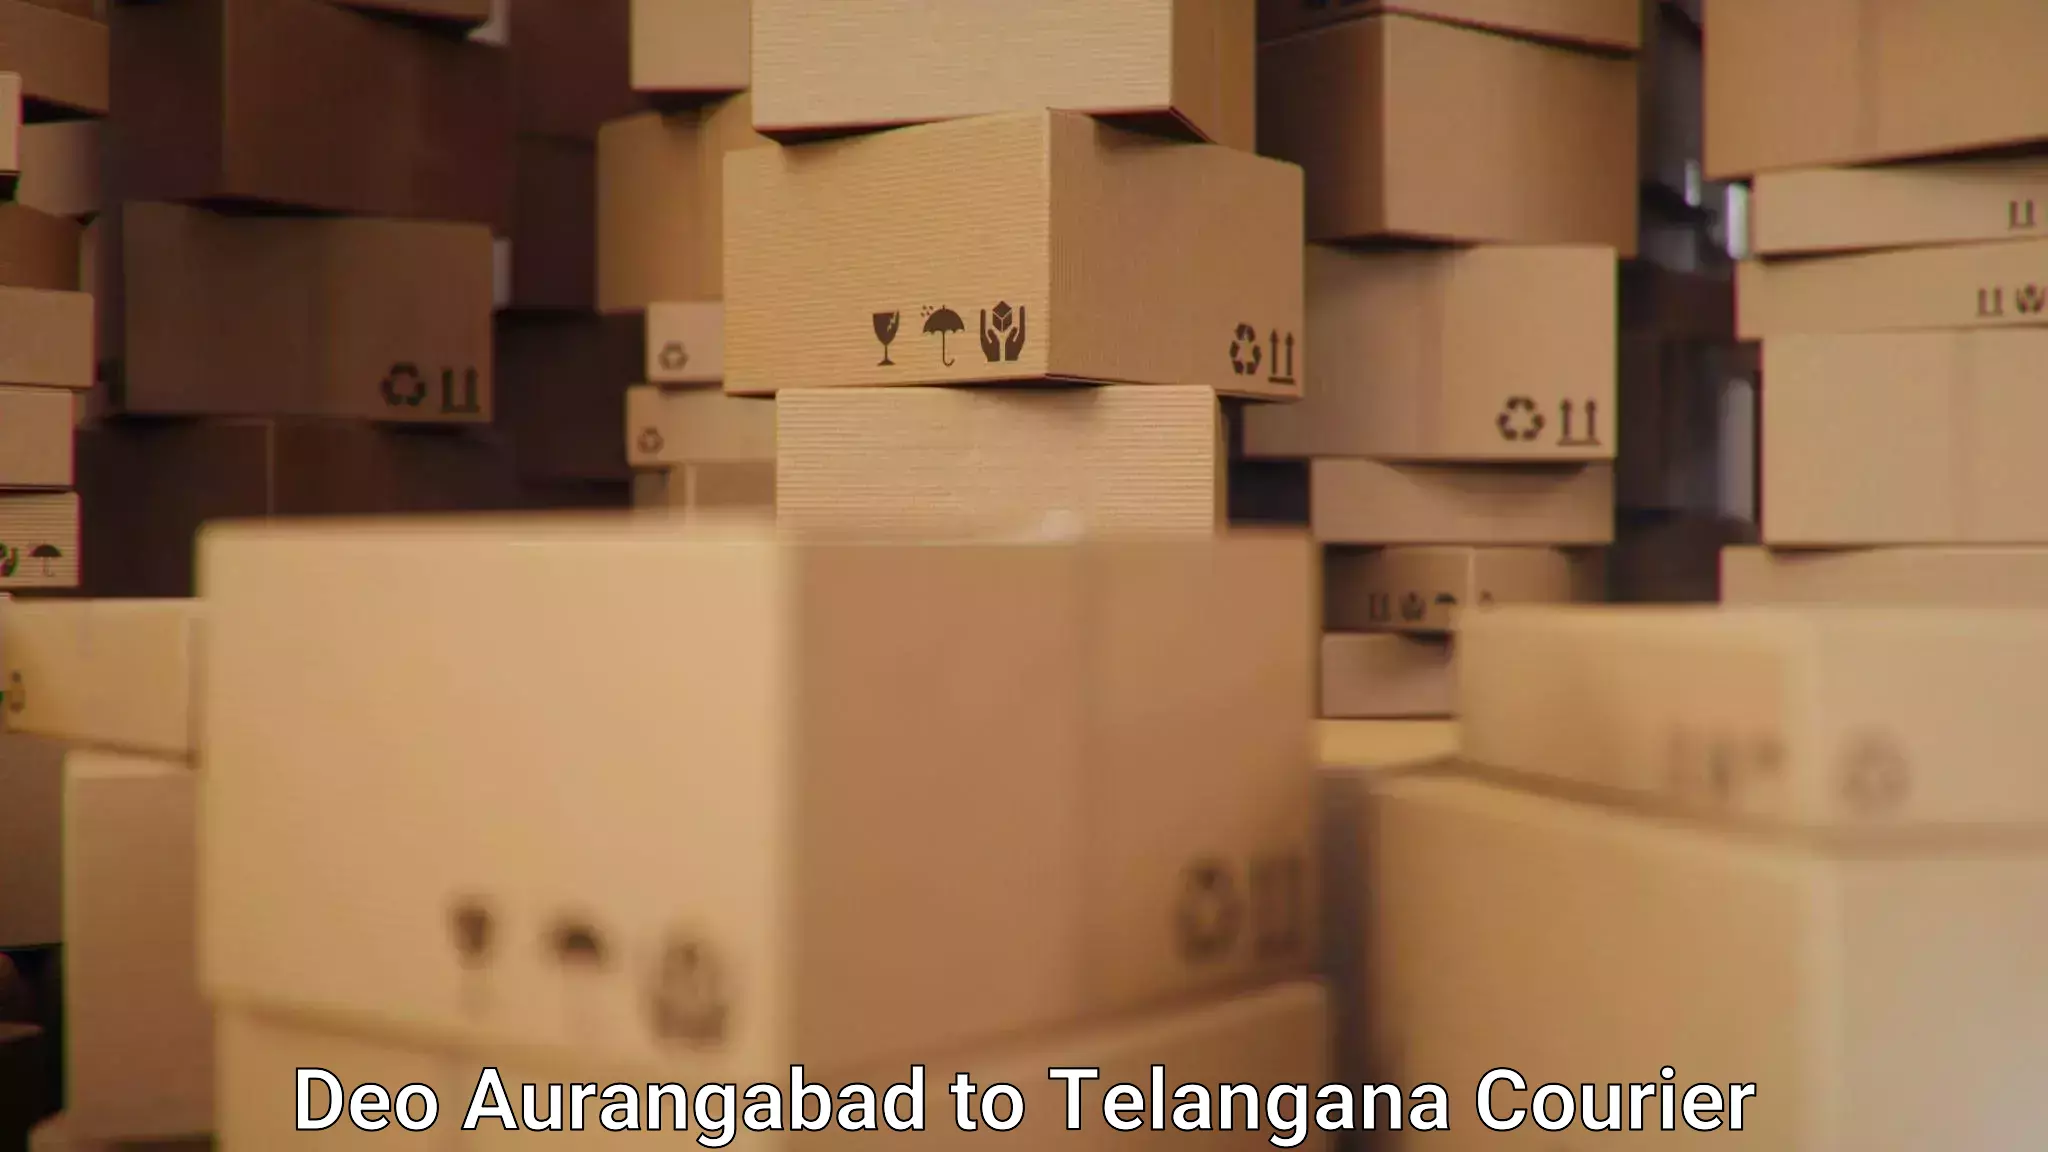 Courier service innovation Deo Aurangabad to Hajipur Mancherial